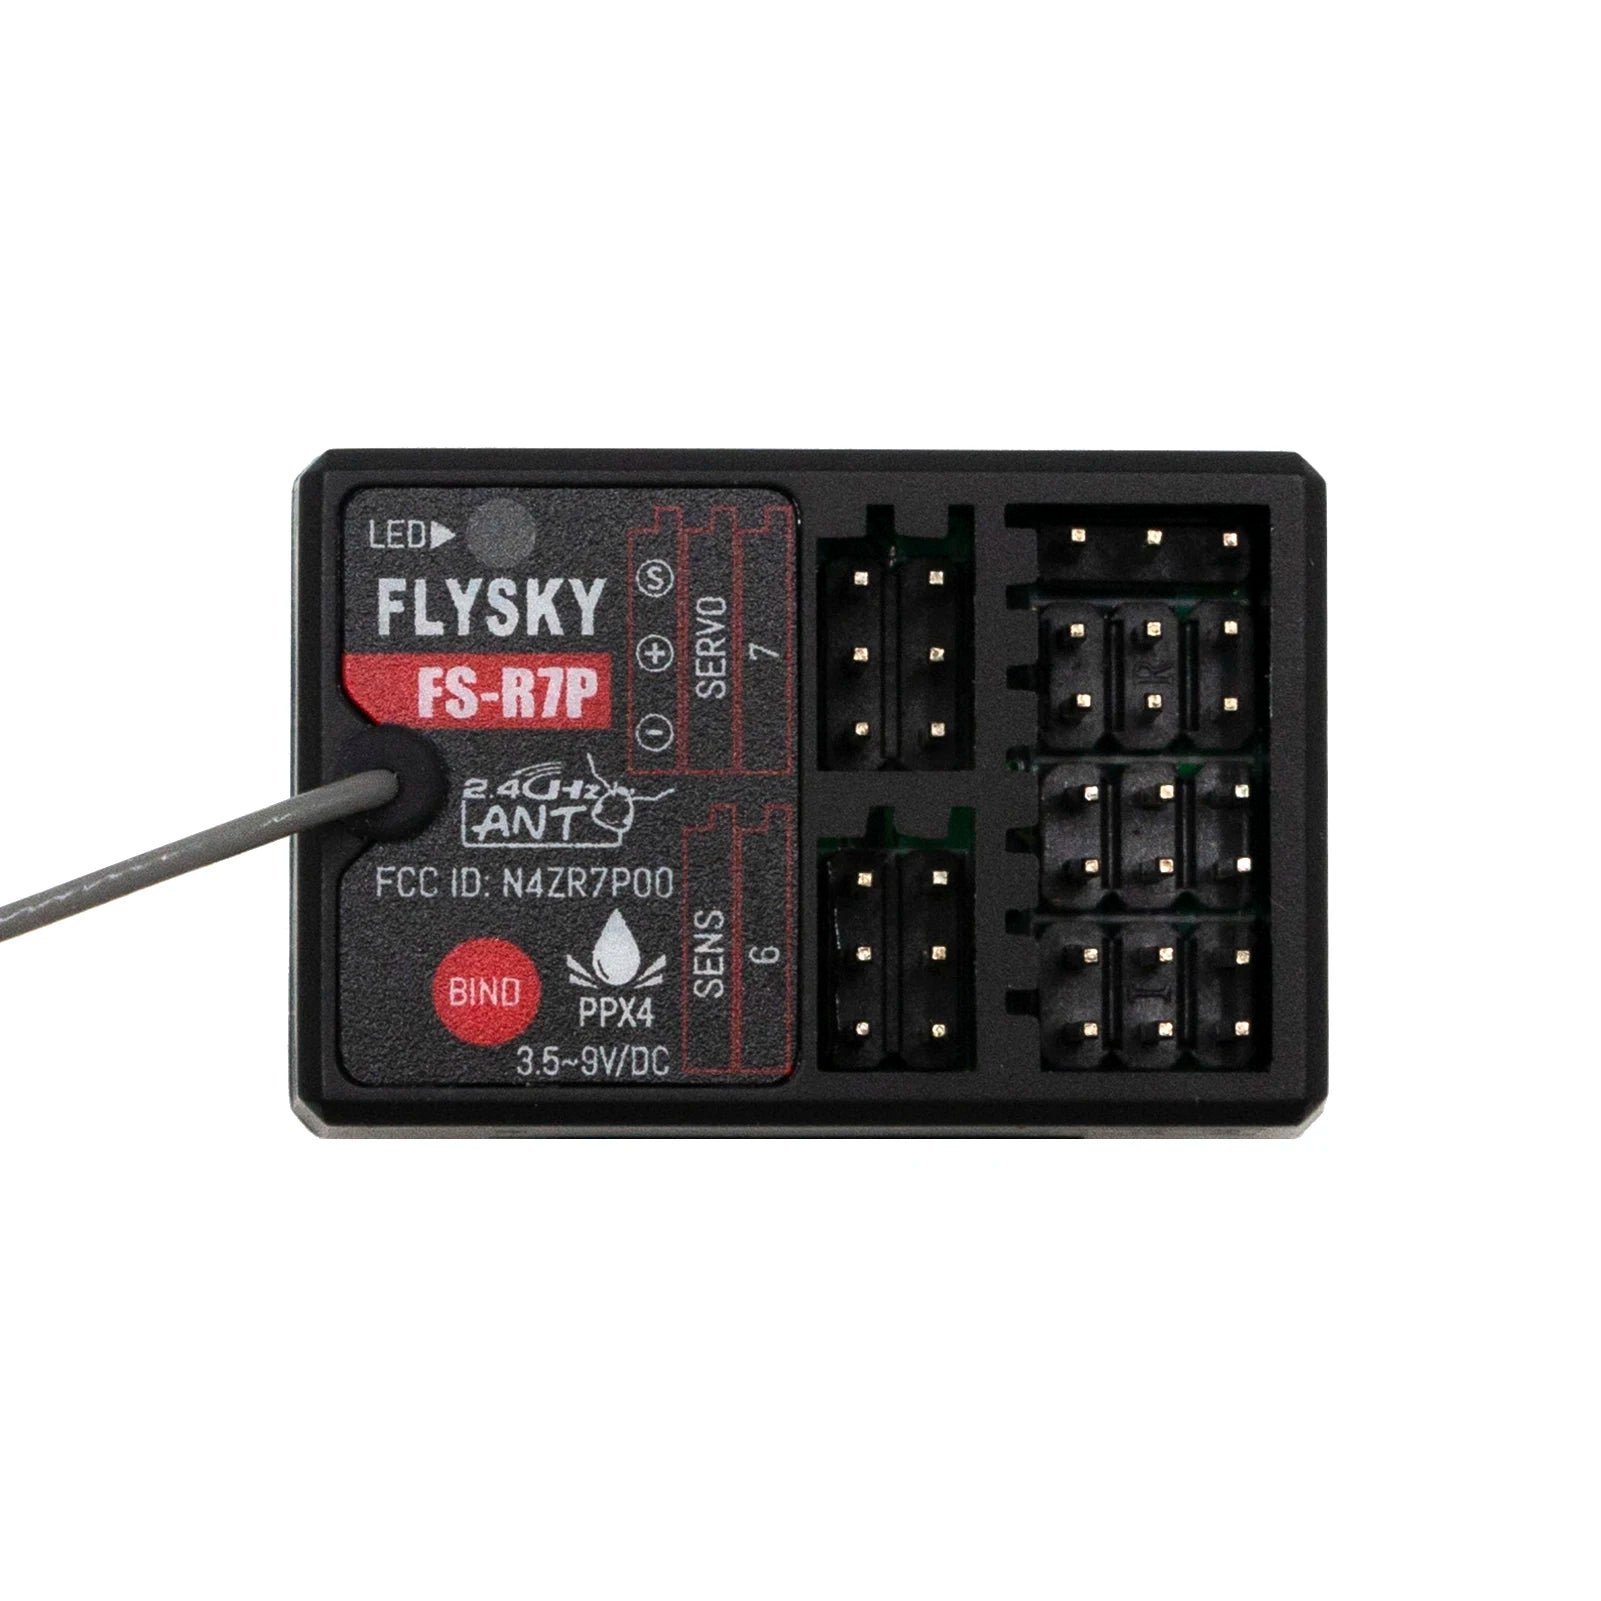 Flysky 2.4G ANT Protocol Receiver, Flysky 2.4G ANT Protocol Receive